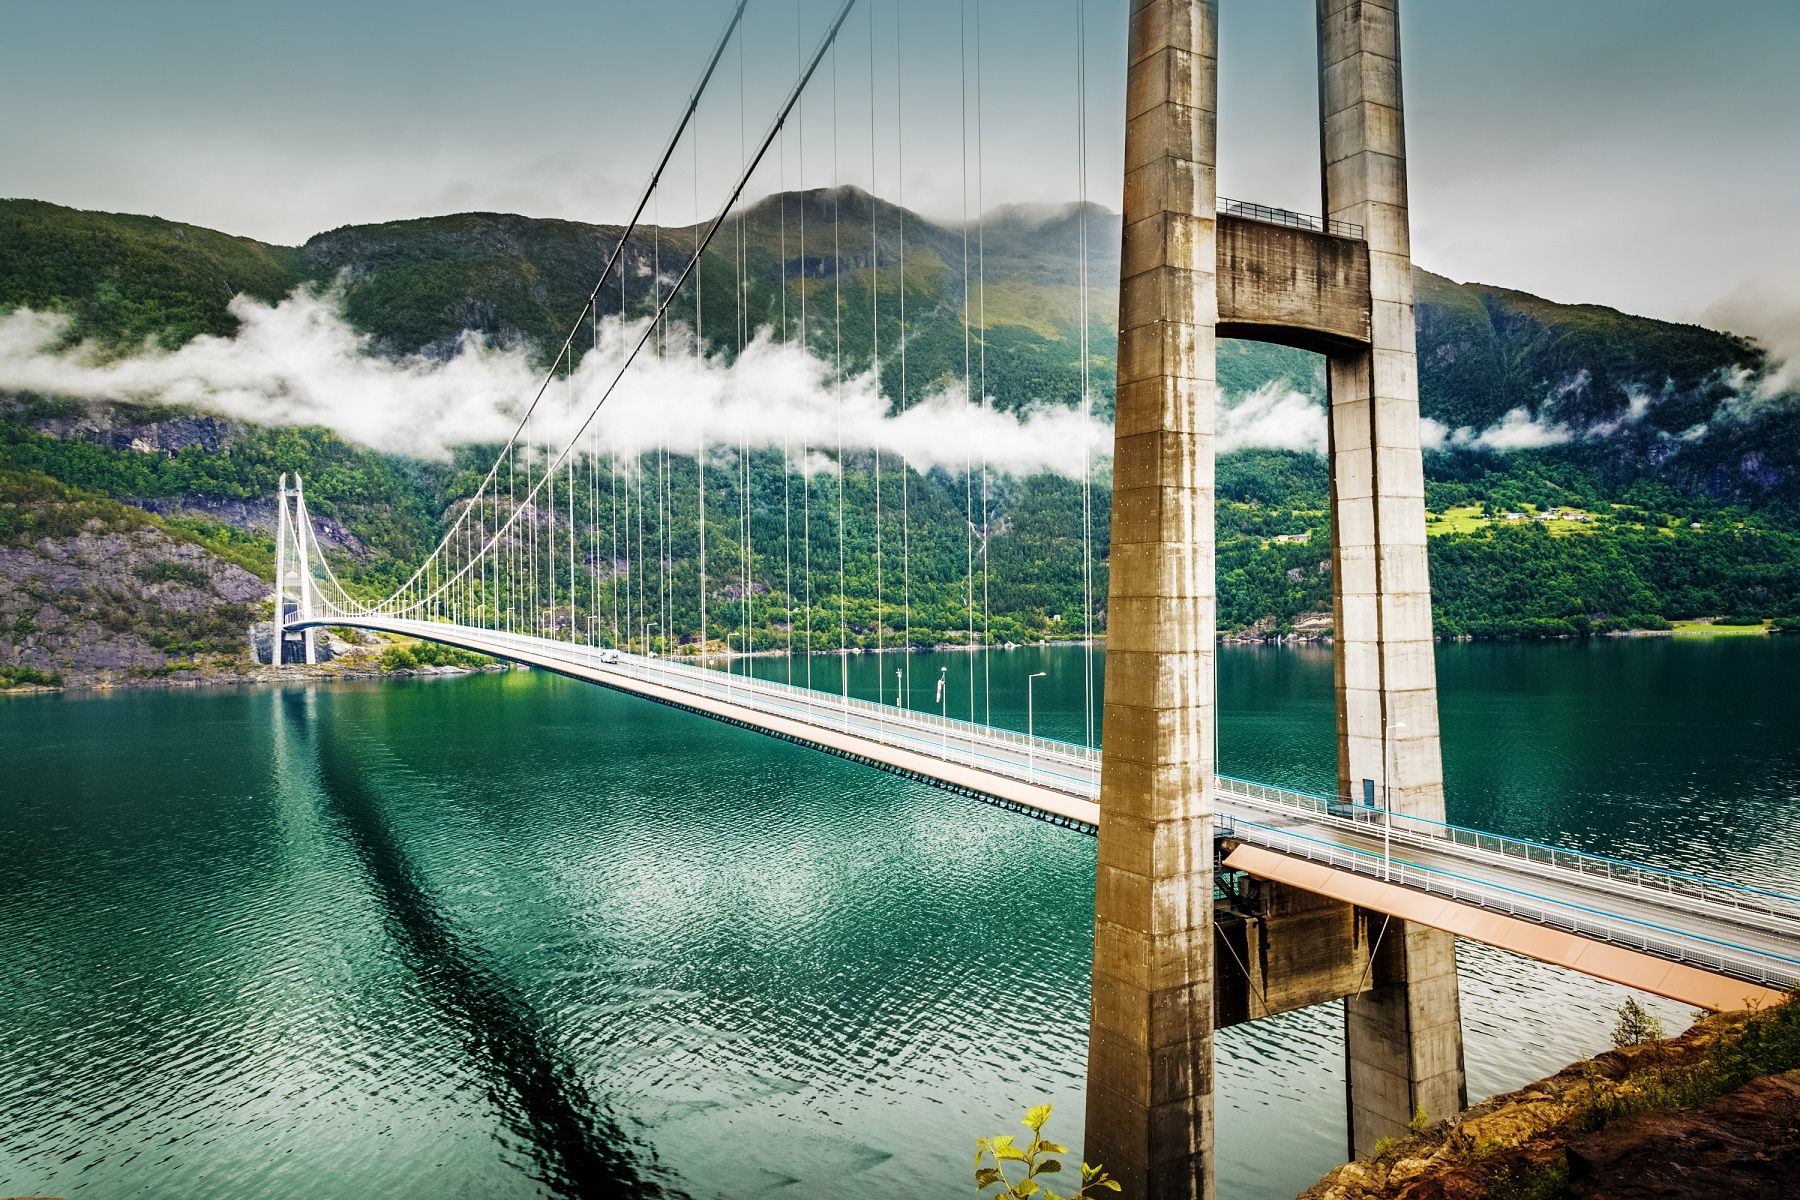 The Hardanger bridge, a beautiful suspension bridge in scenic Norway.